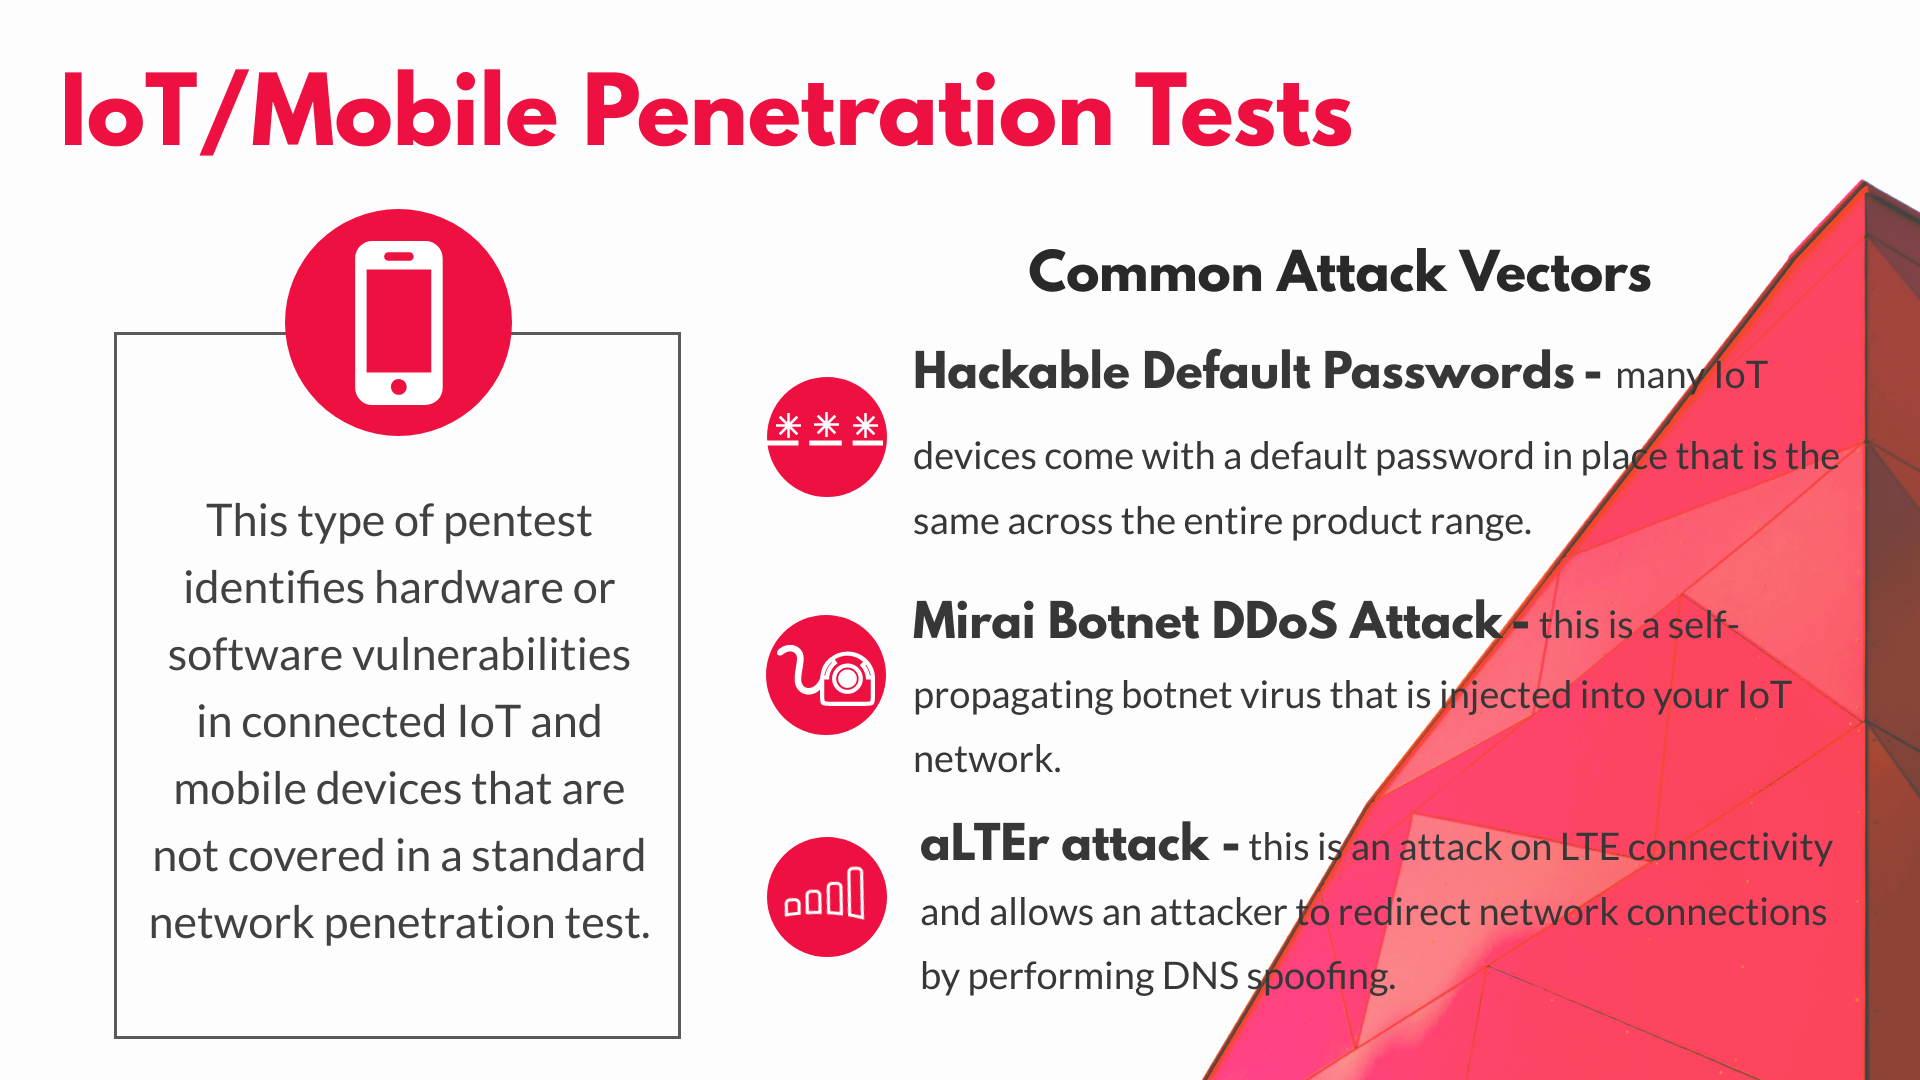 Network penetration vulnerabilites